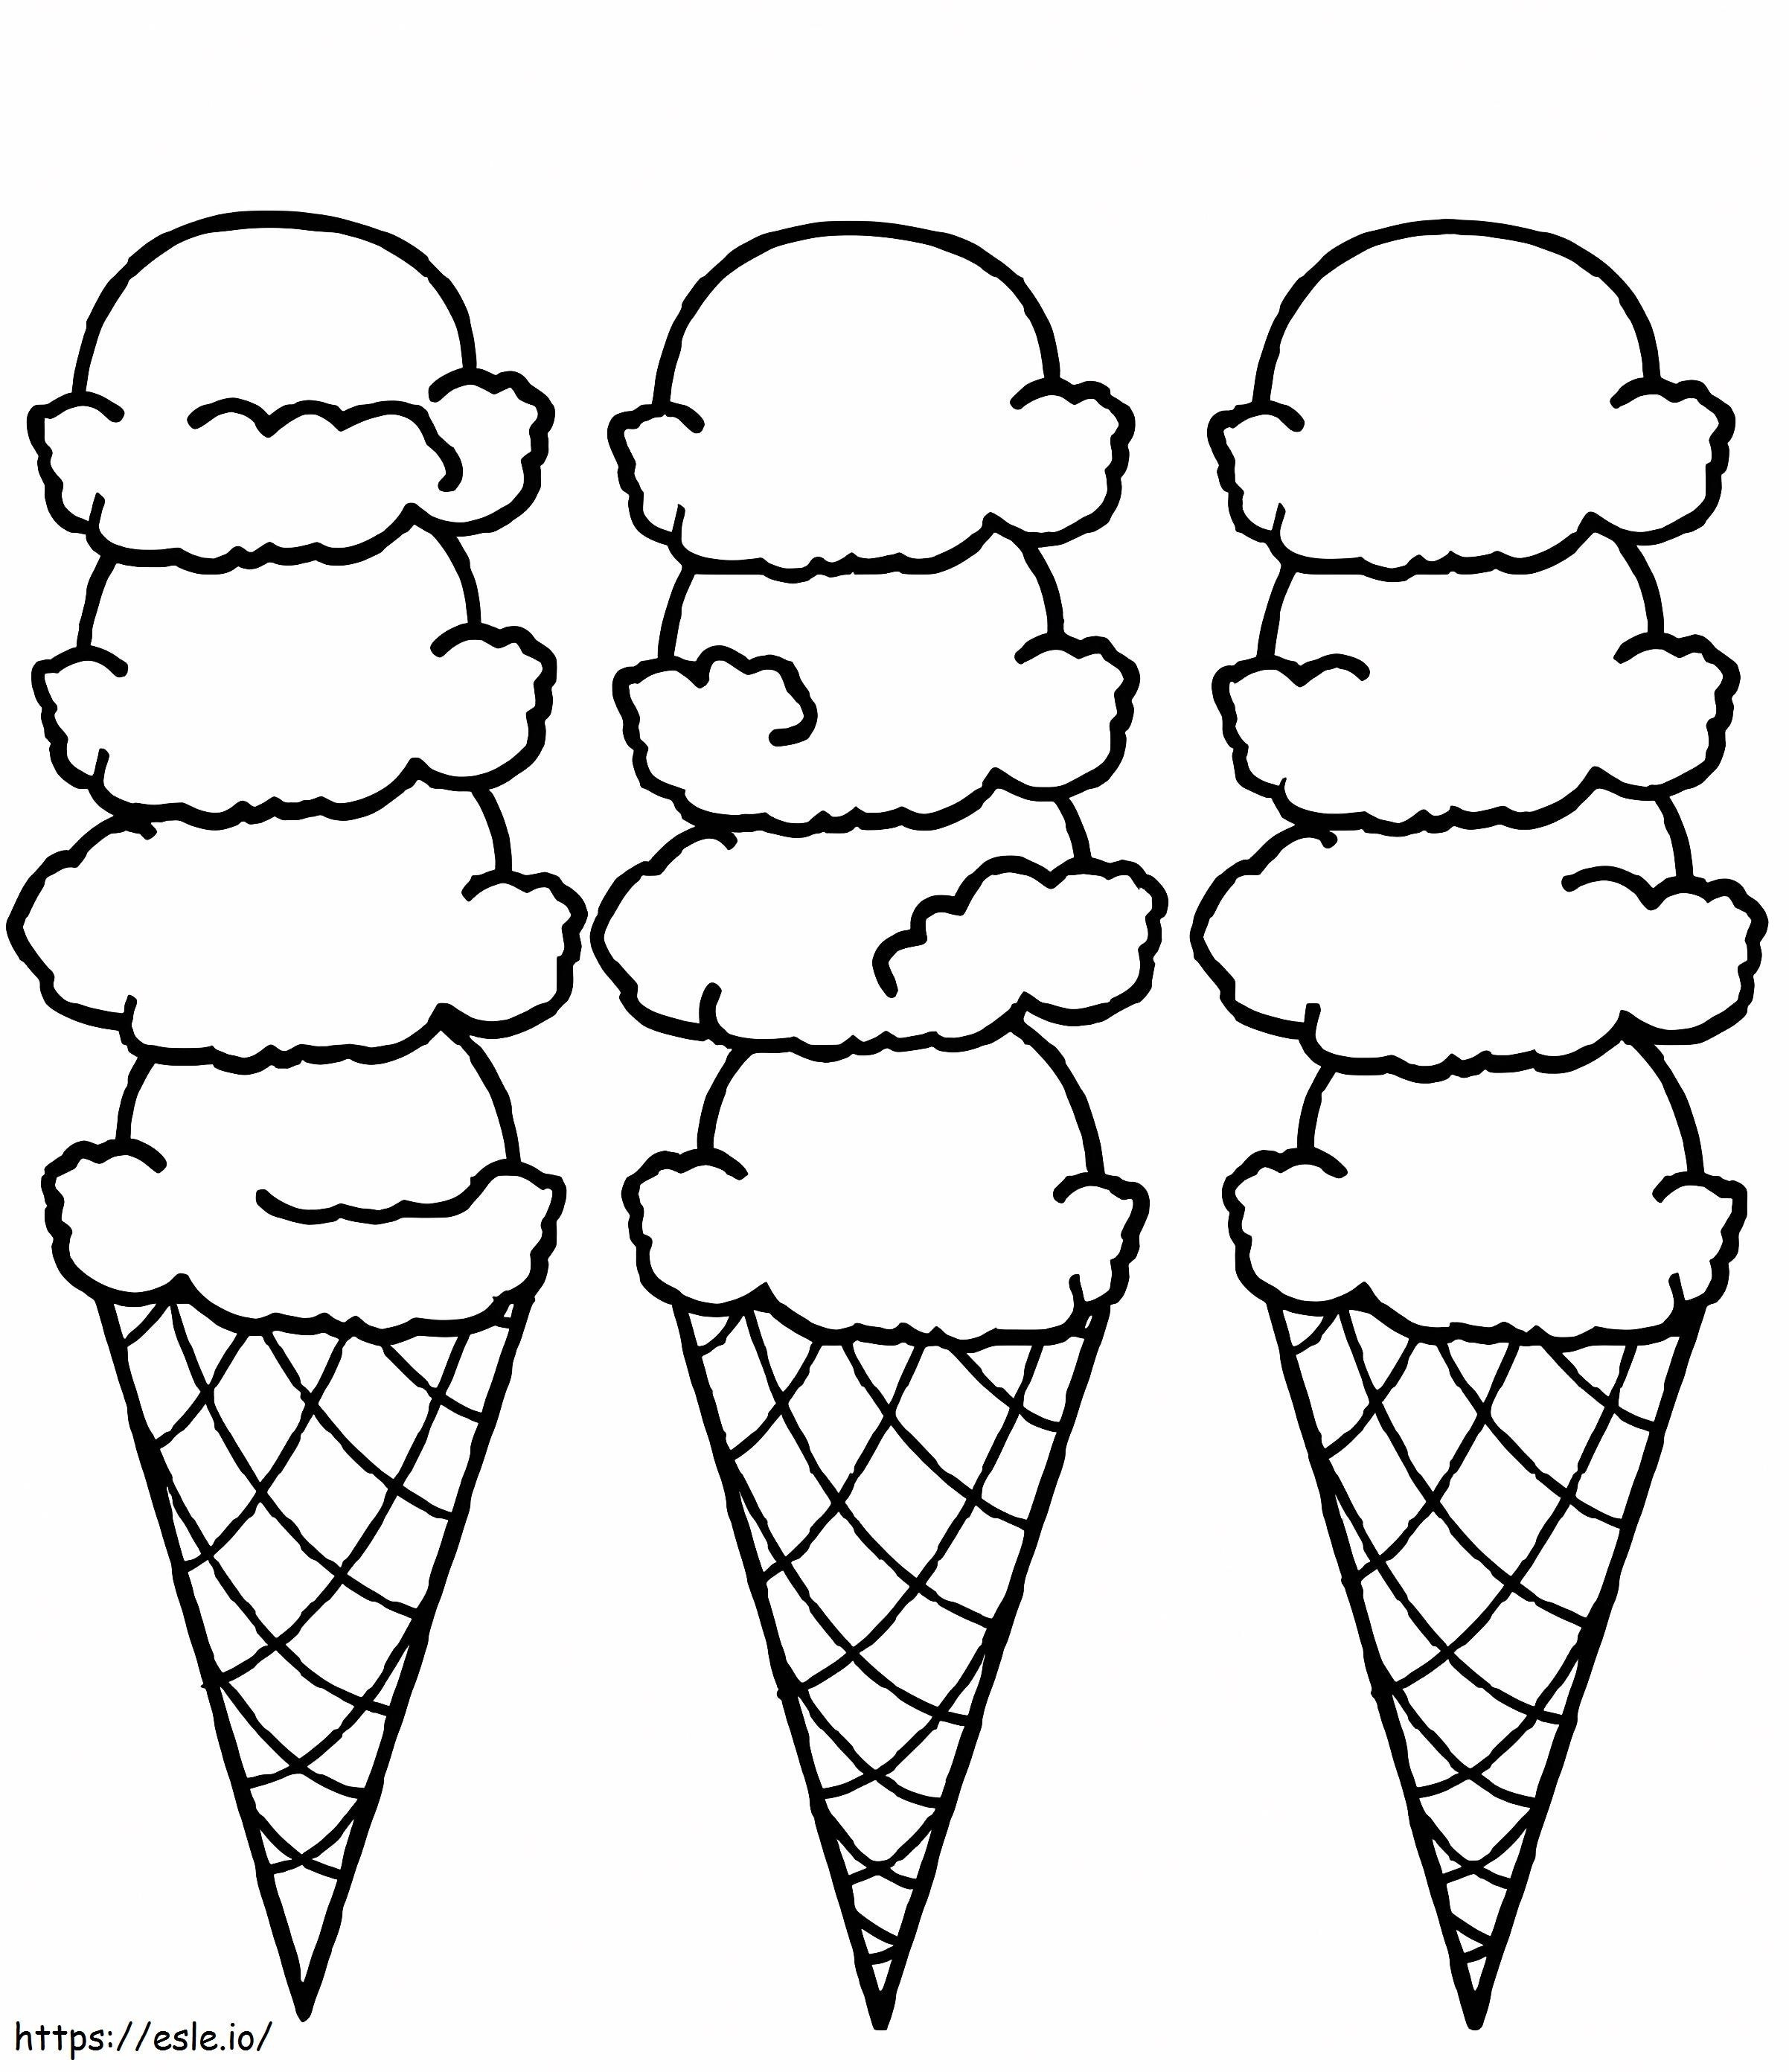 Üç Uzun Dondurma boyama